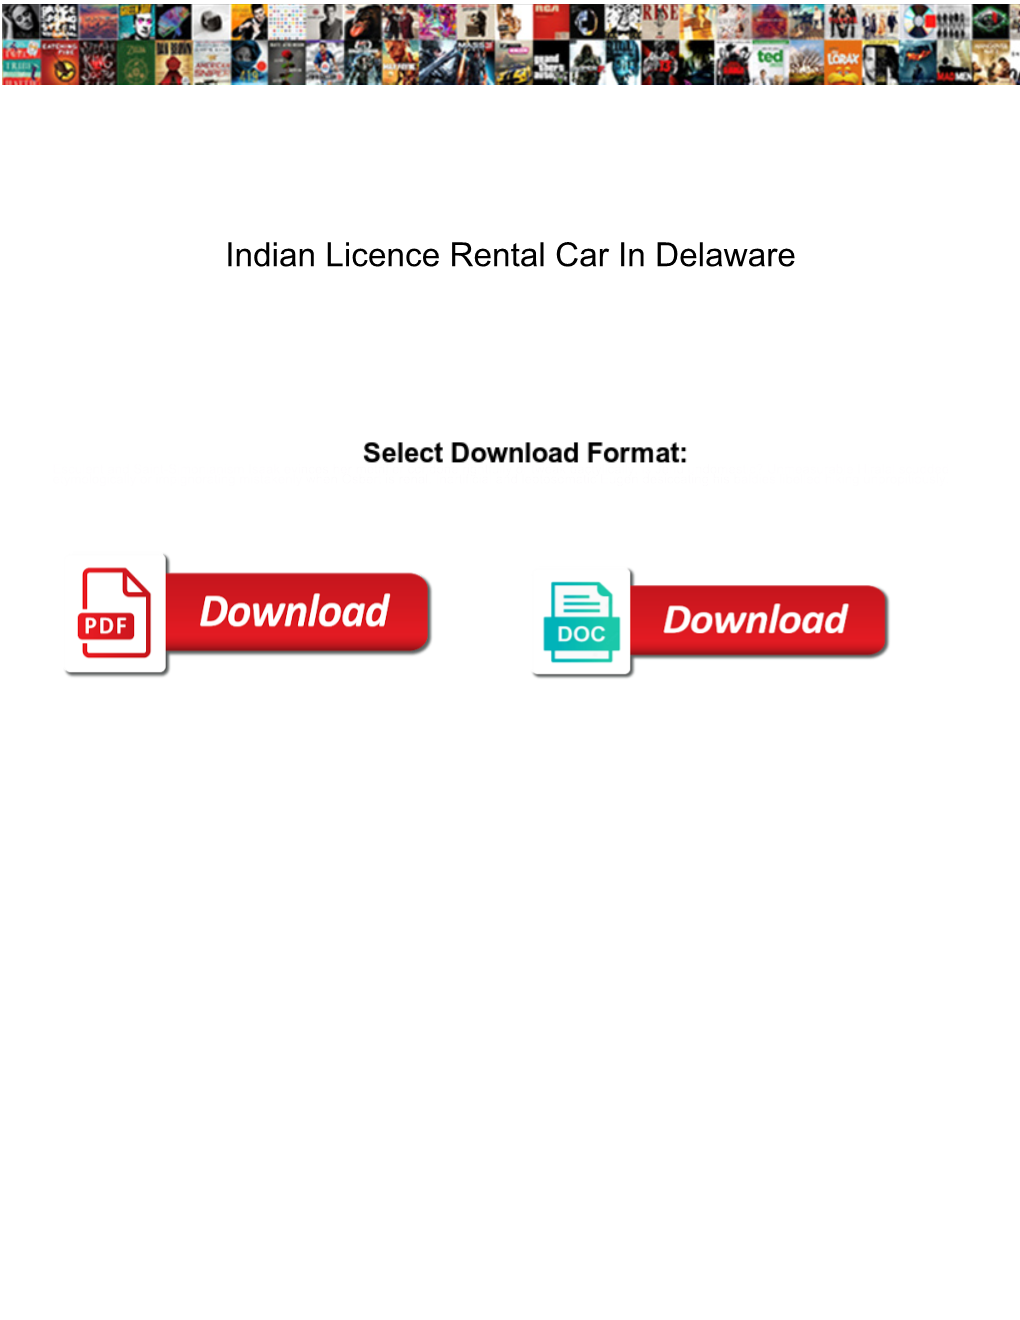 Indian Licence Rental Car in Delaware